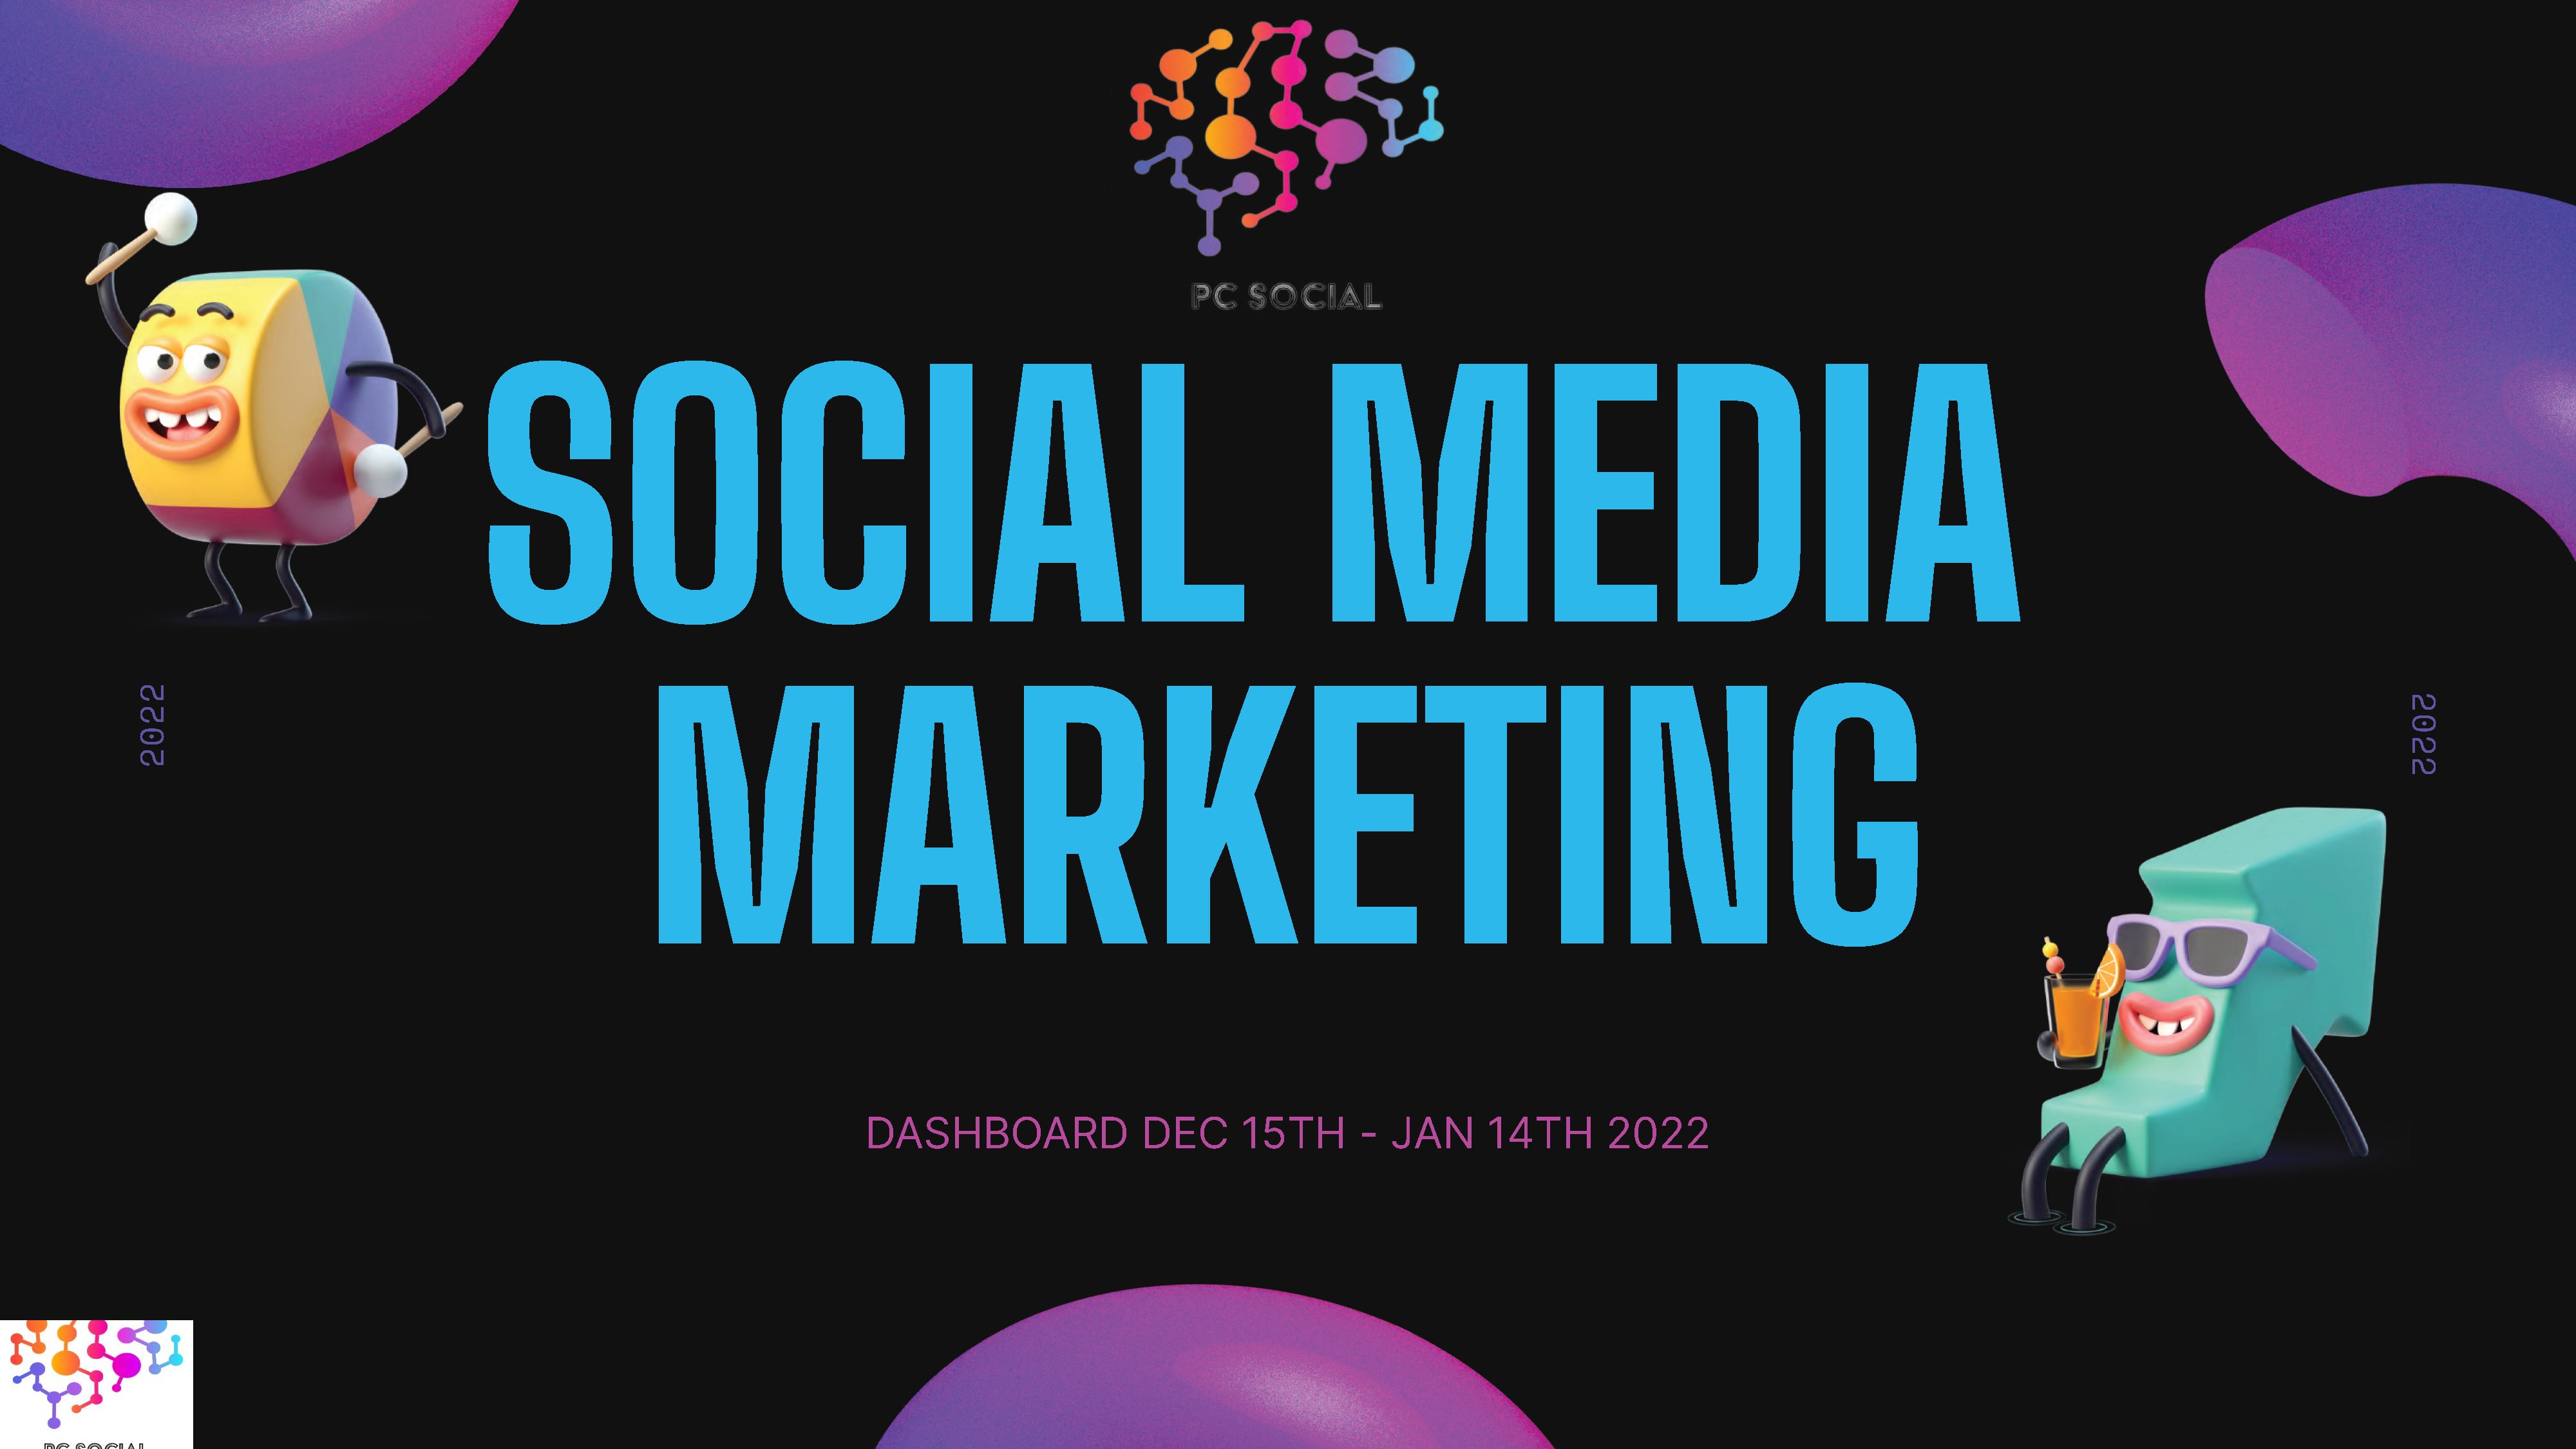 Marketing, Social Media, Data, Social Listening, Dashboard, Real time data, Video Marketing, Video, DataViz